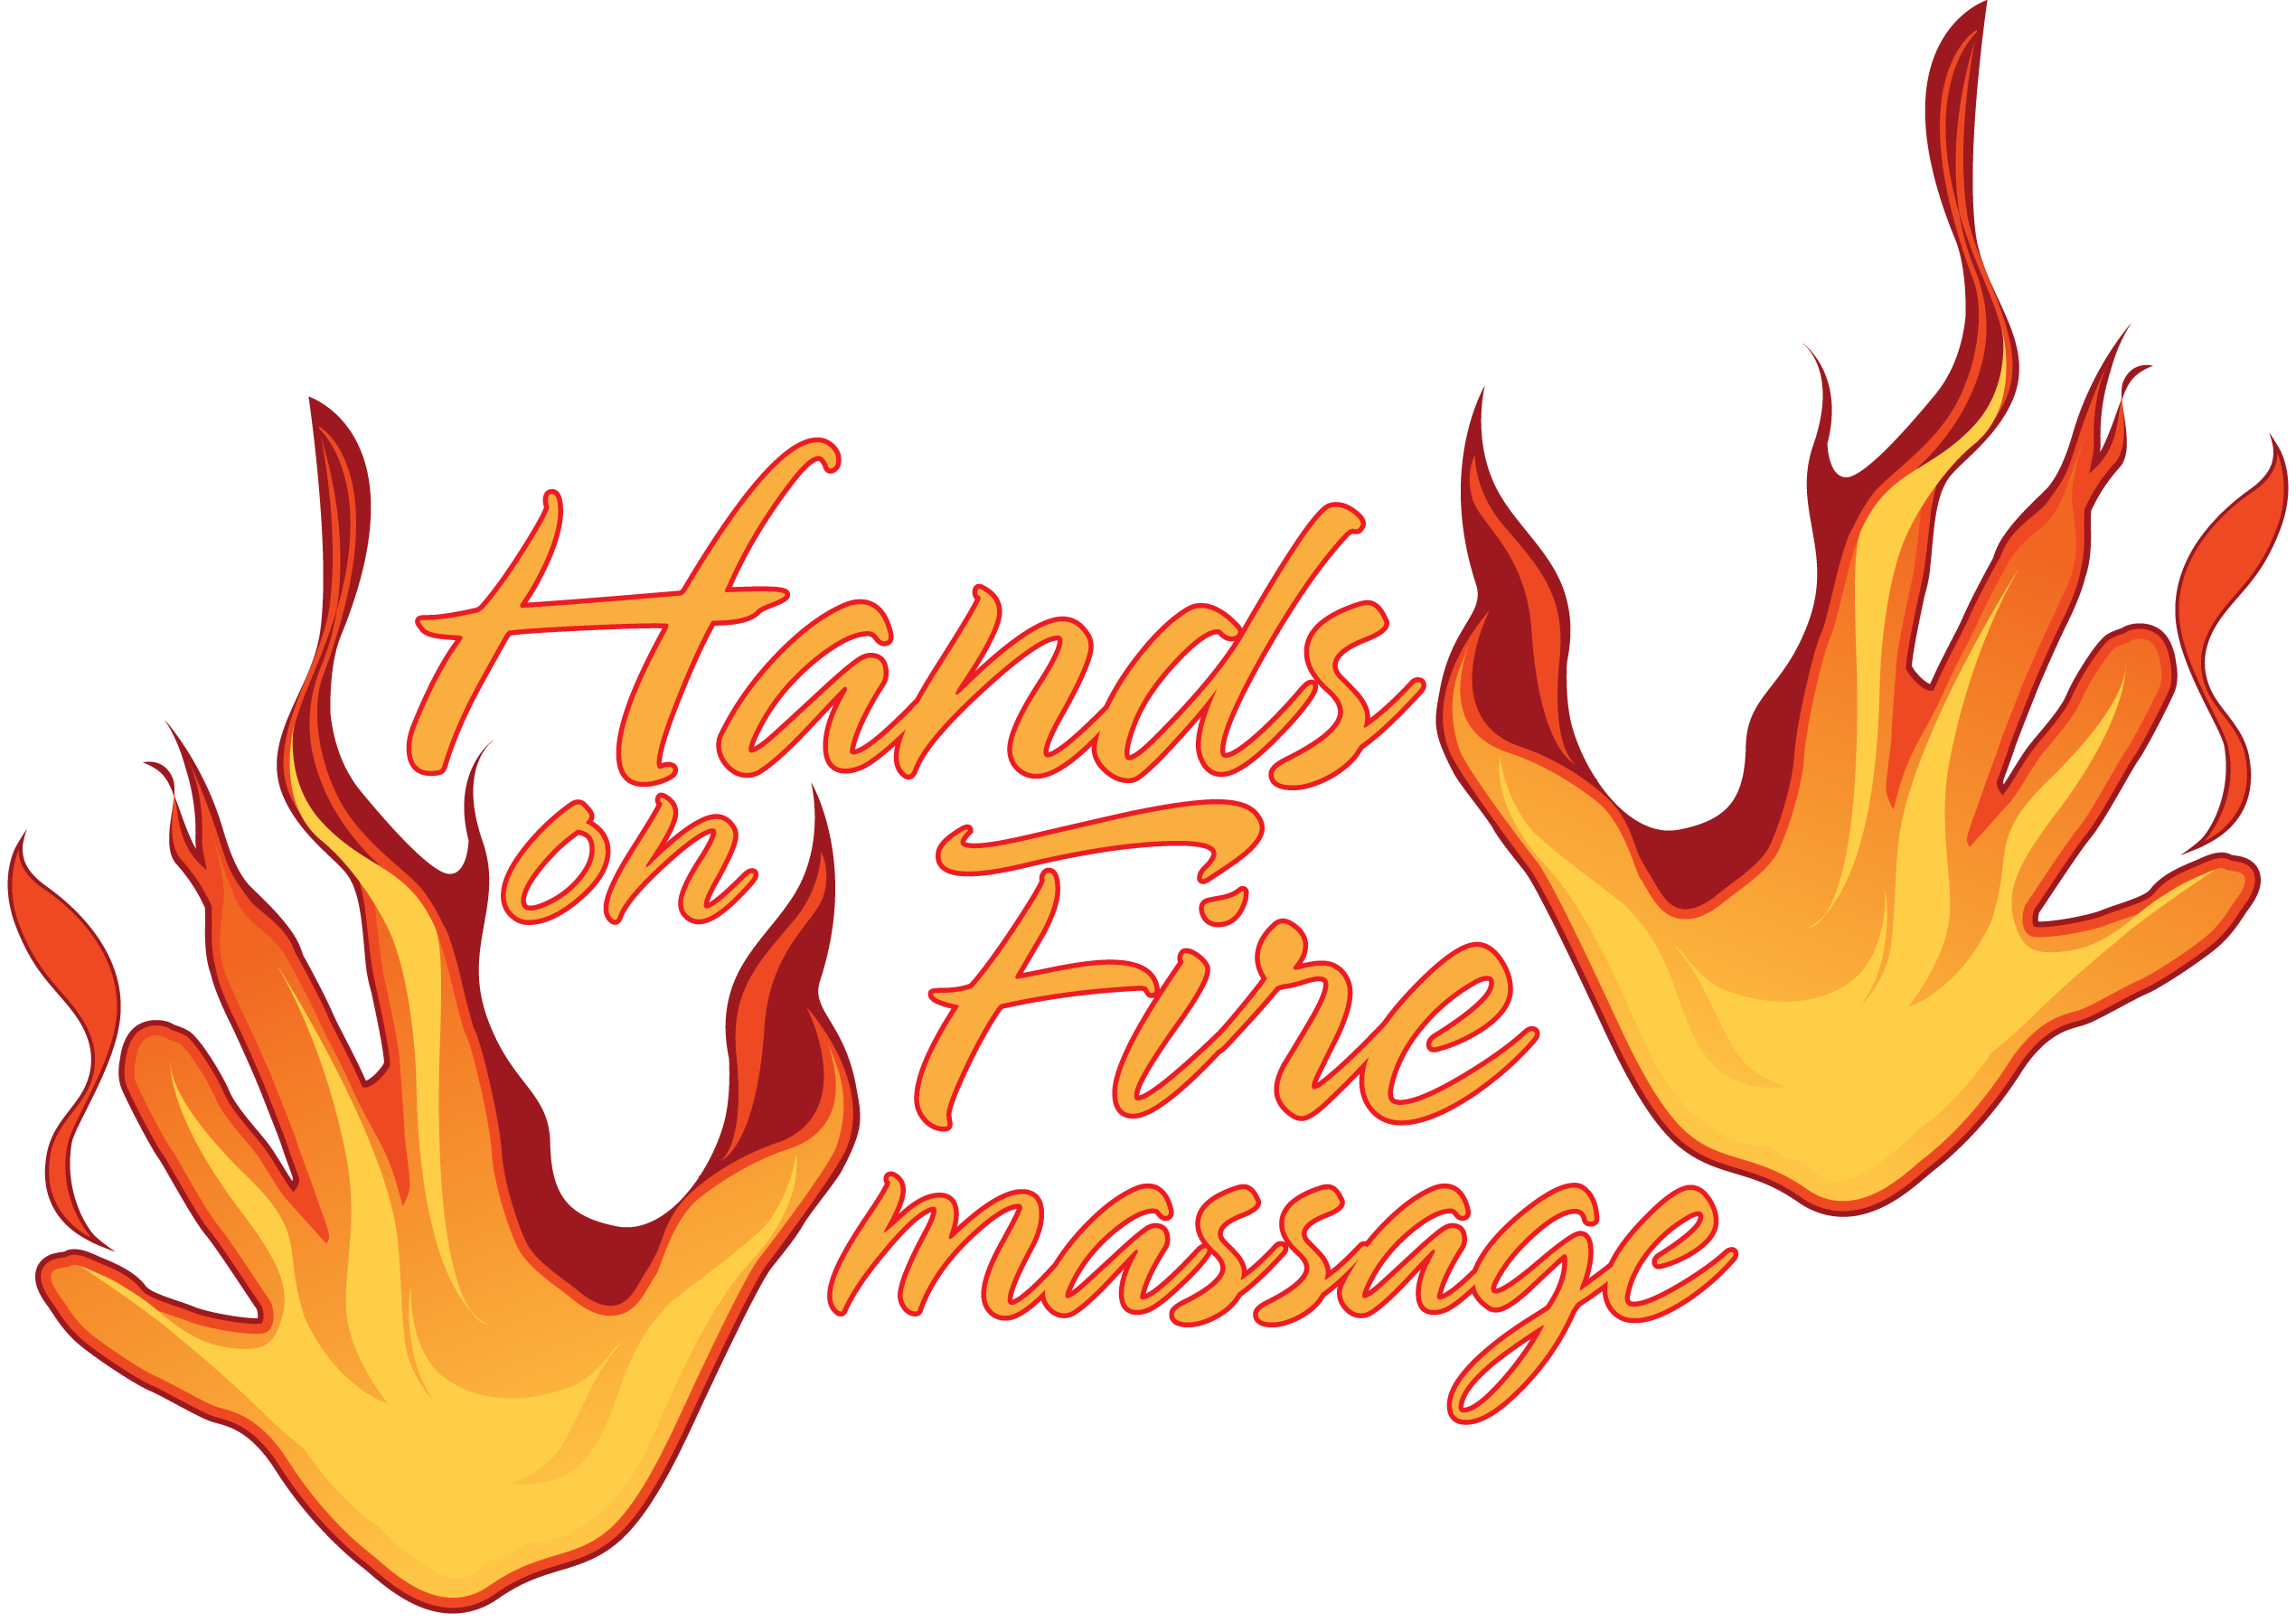 Therapeutic Massage Evergreen - Hands on Fire Massage